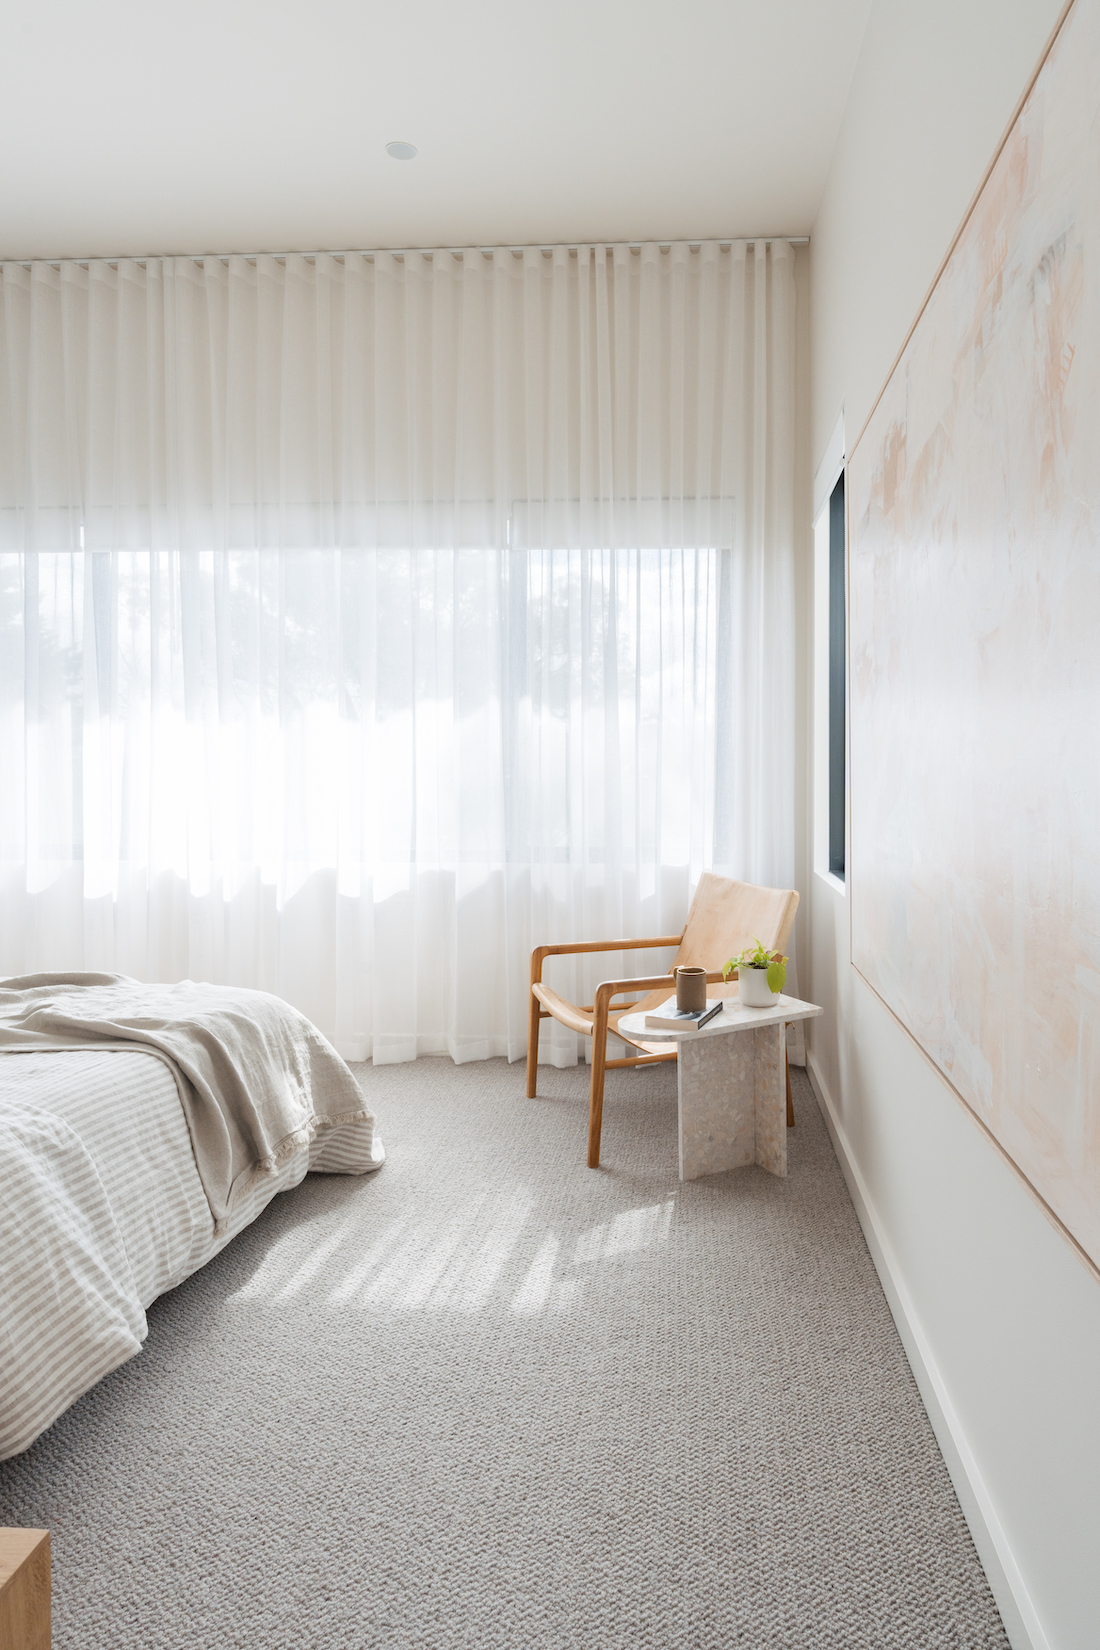 Linen blend sheer curtains in bedroom